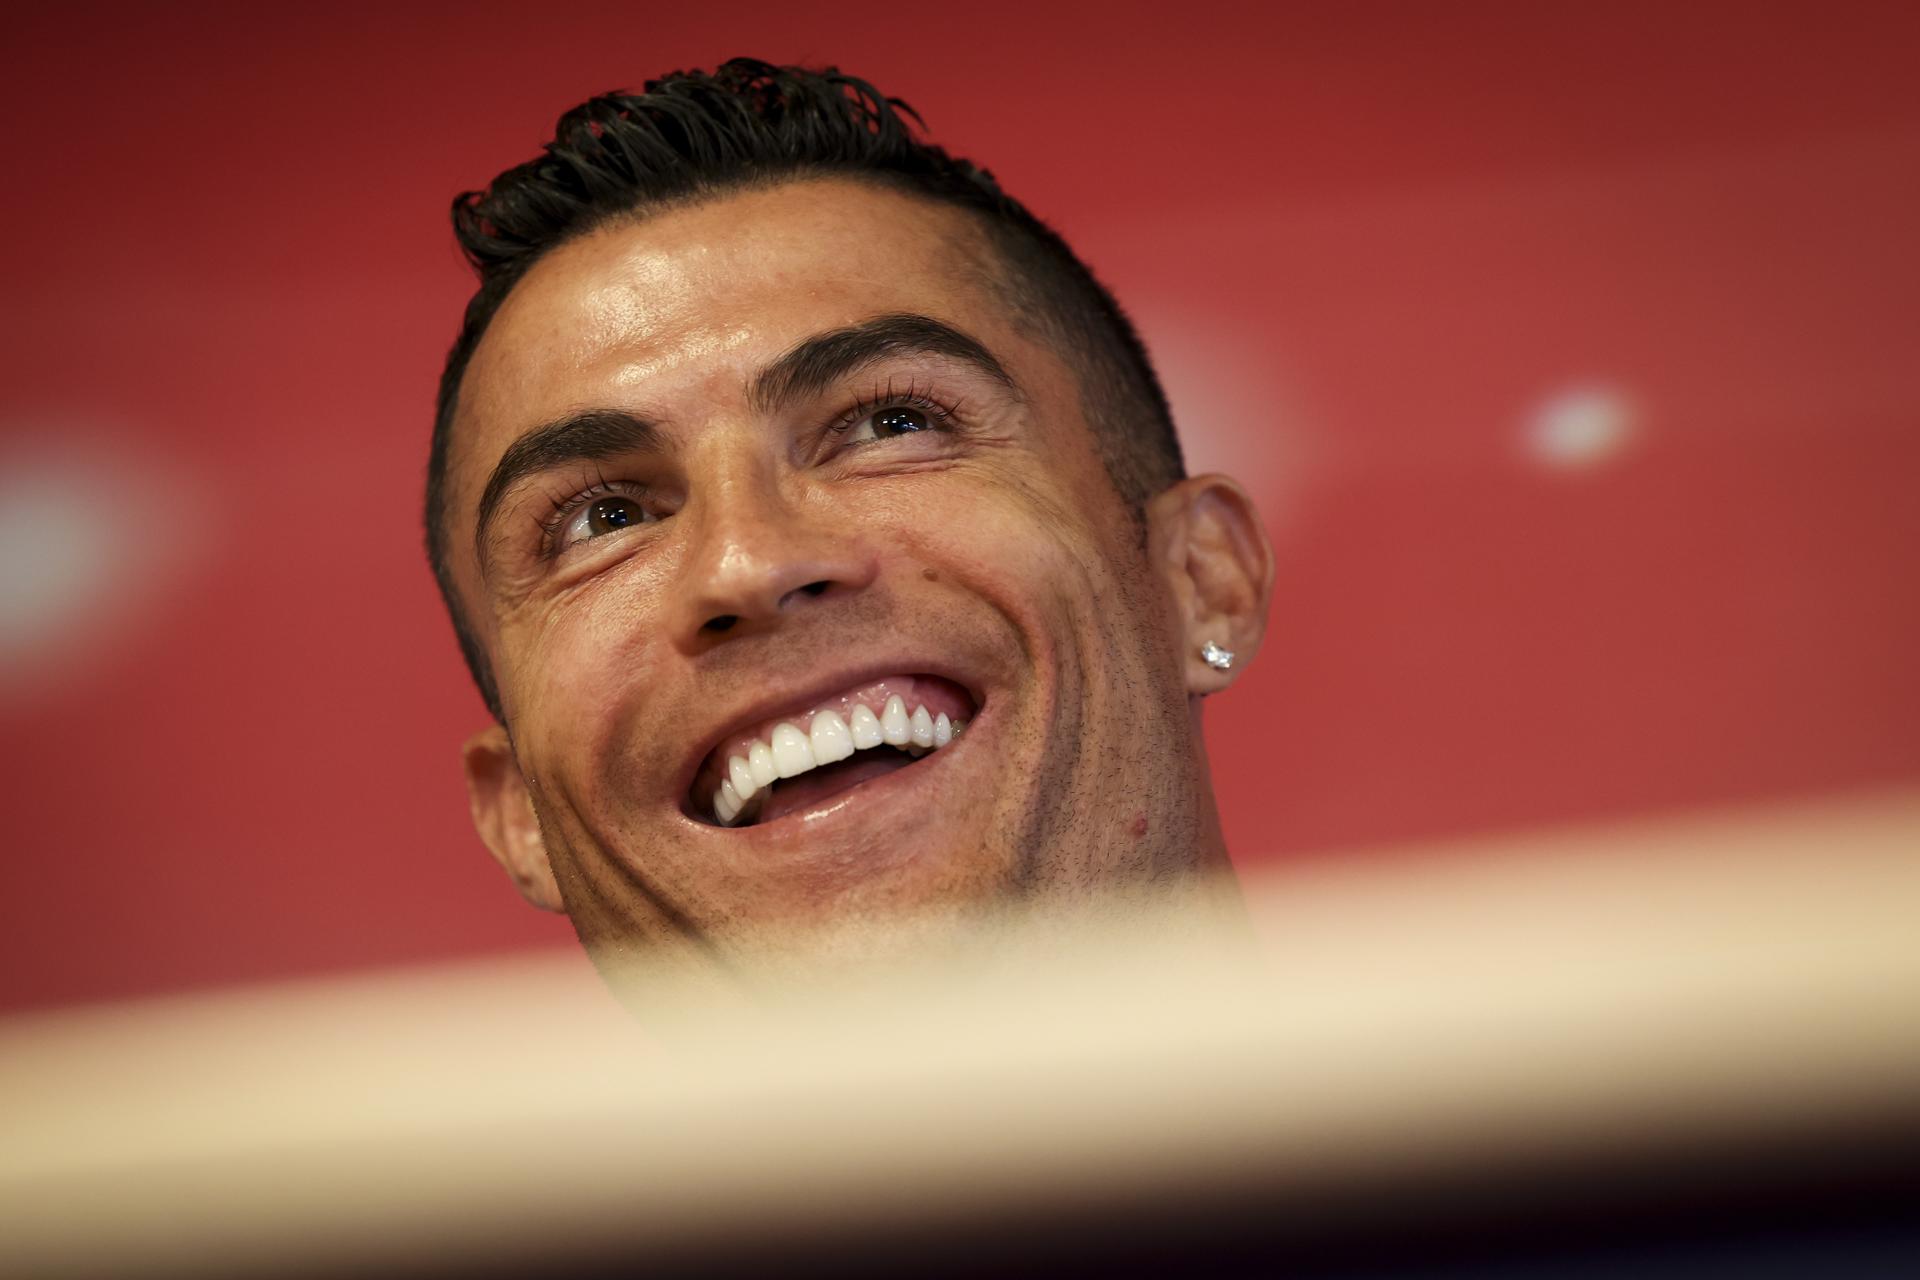 Cristiano Ronaldo, a punto de llegar a 200 partidos con Portugal: “No renunciaré a la selección”